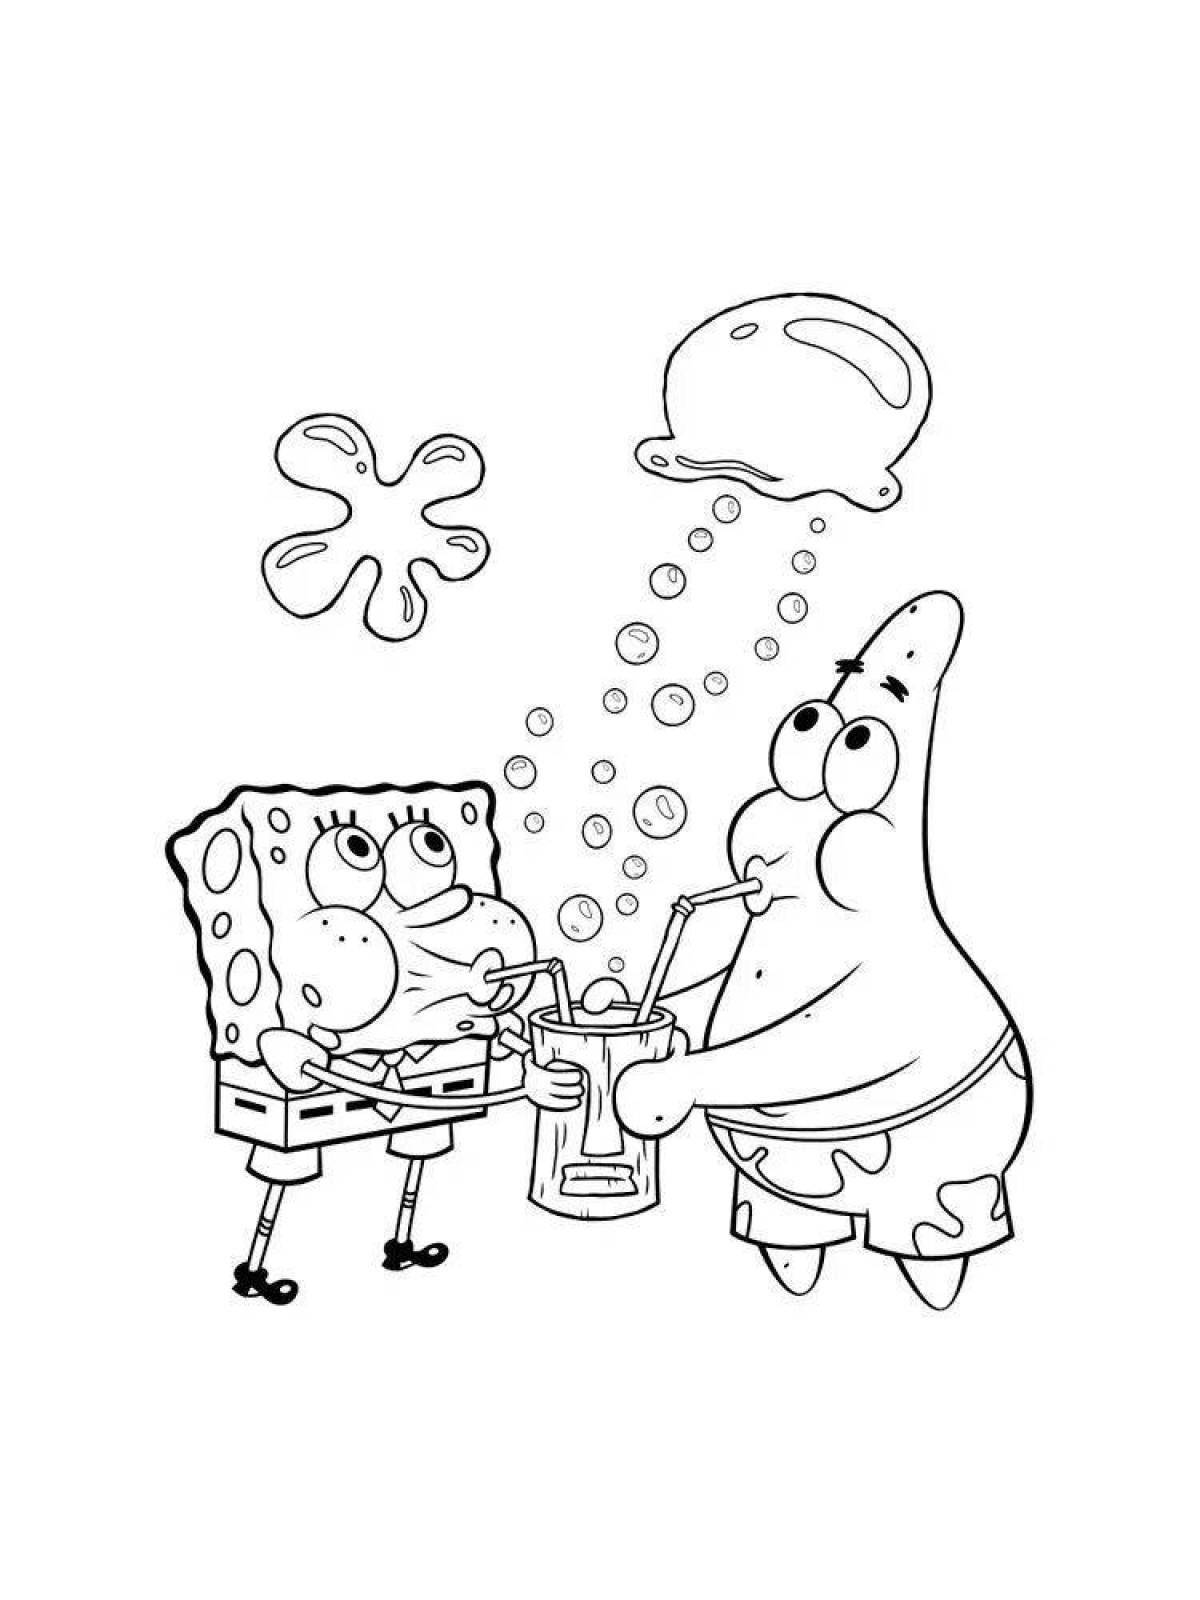 Spongebob and patrick #12